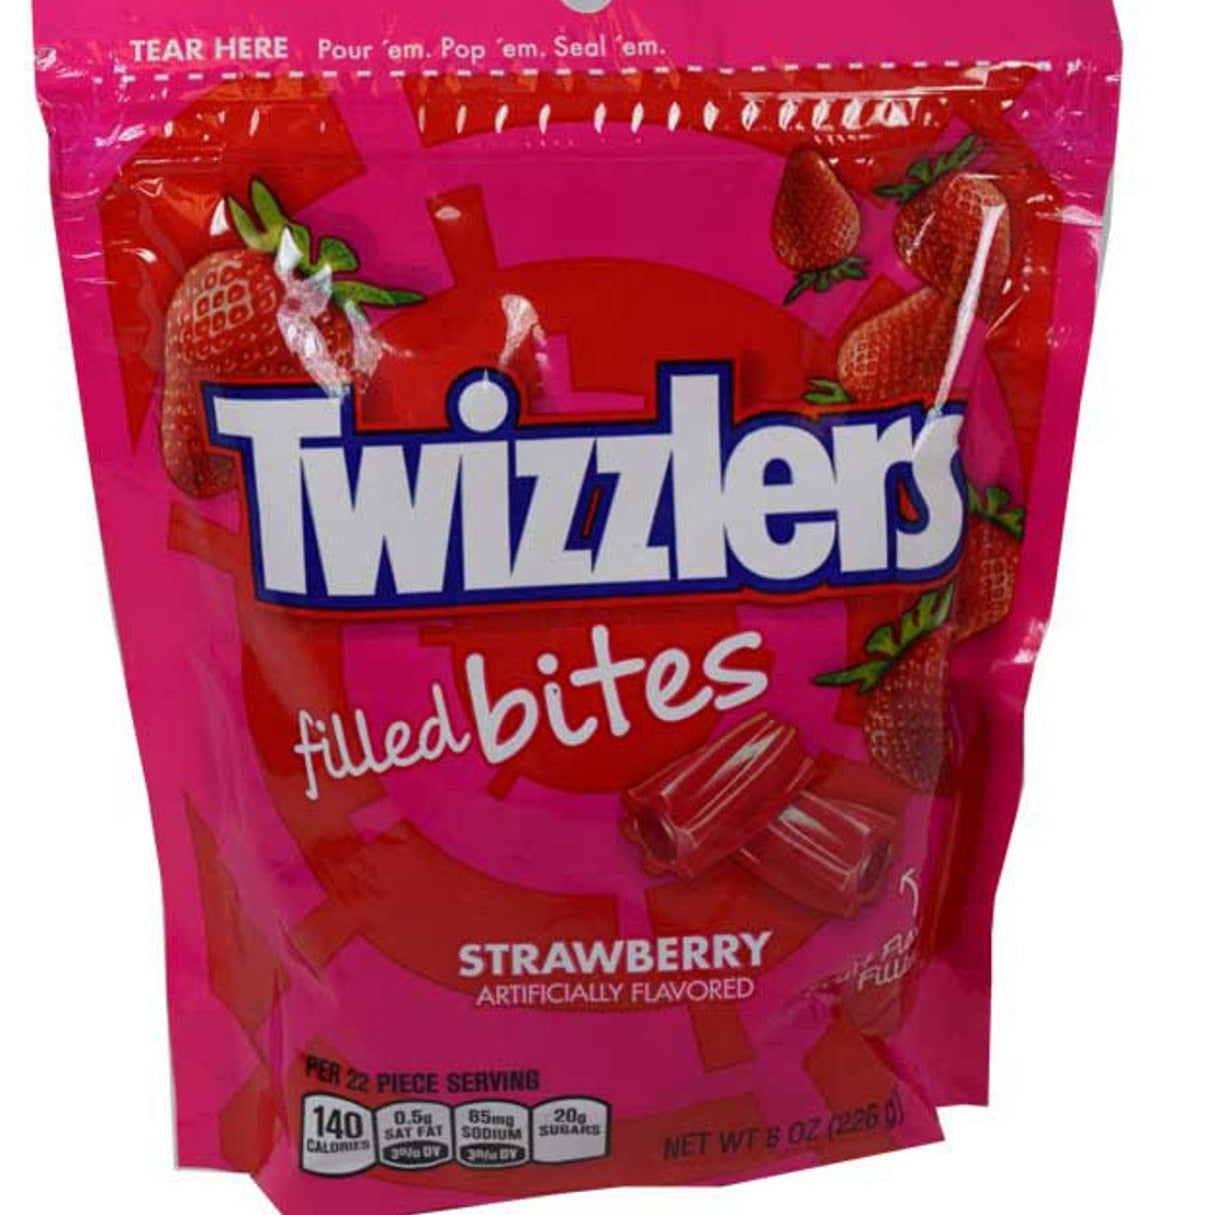 Twizzlers Filled Bites Strawberry 8oz - 12ct